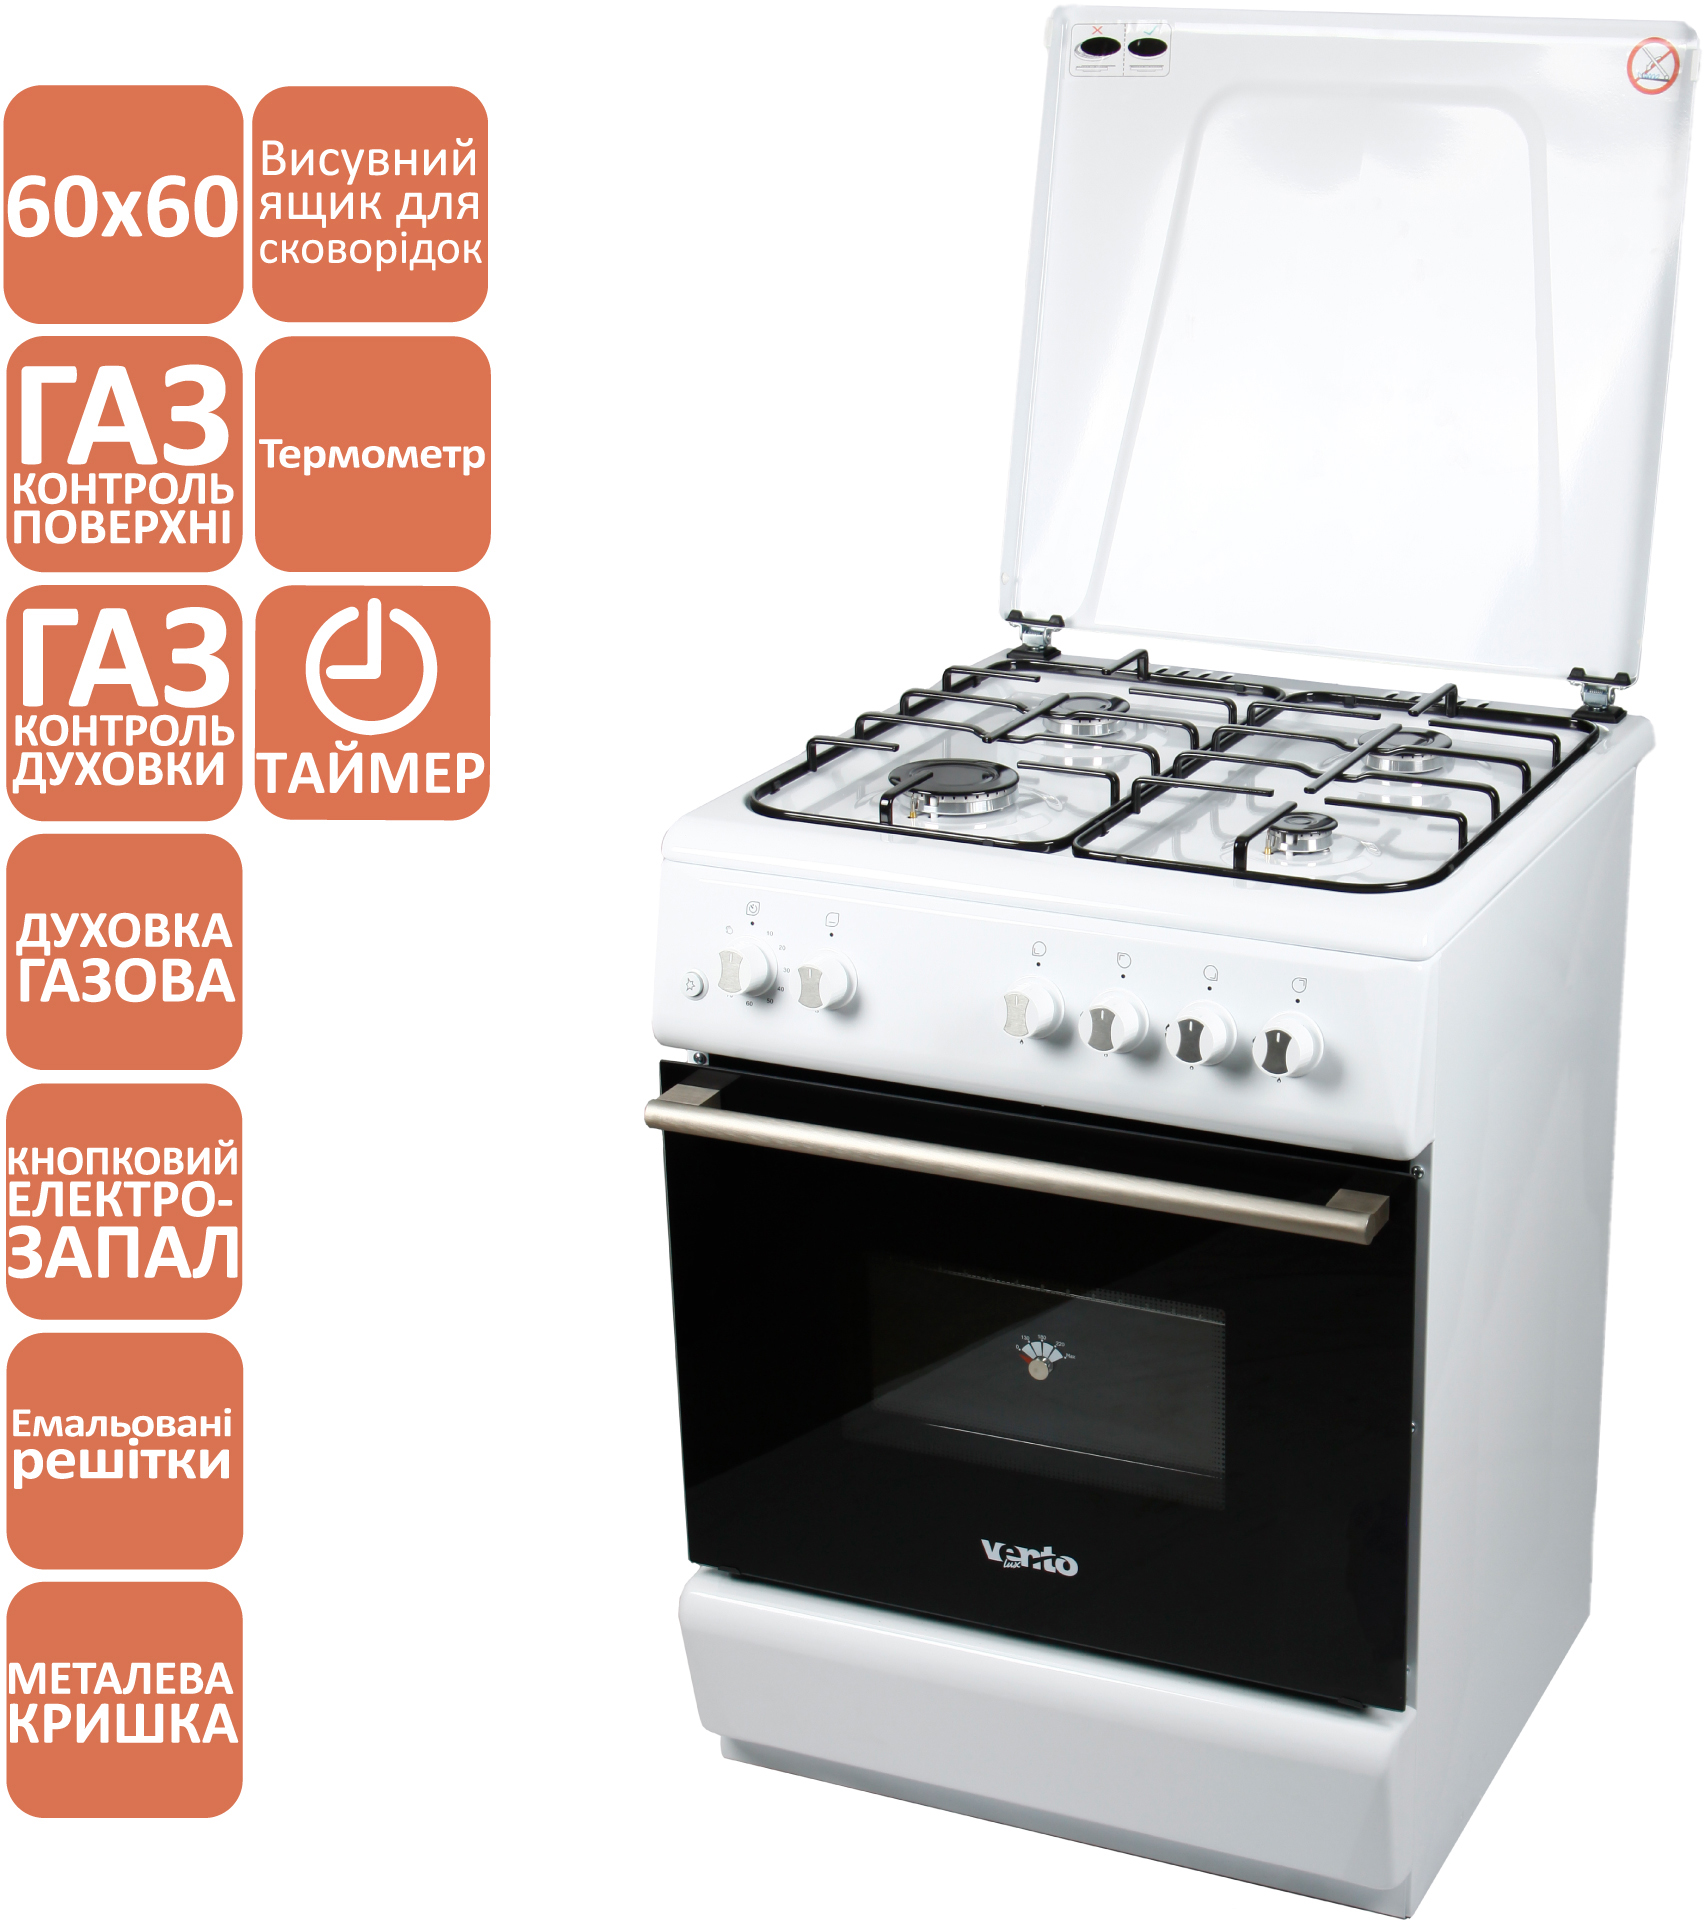 Кухонная плита Ventolux GG 6060 ES (WH) T цена 0.00 грн - фотография 2